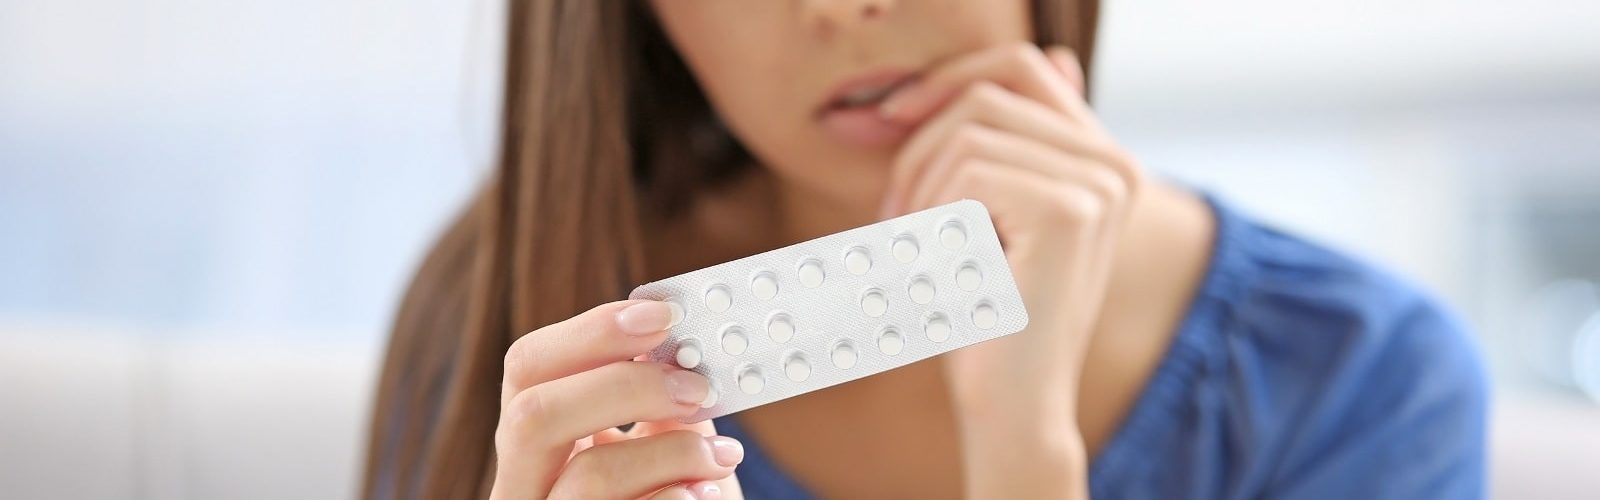 Does contraception affect future fertility